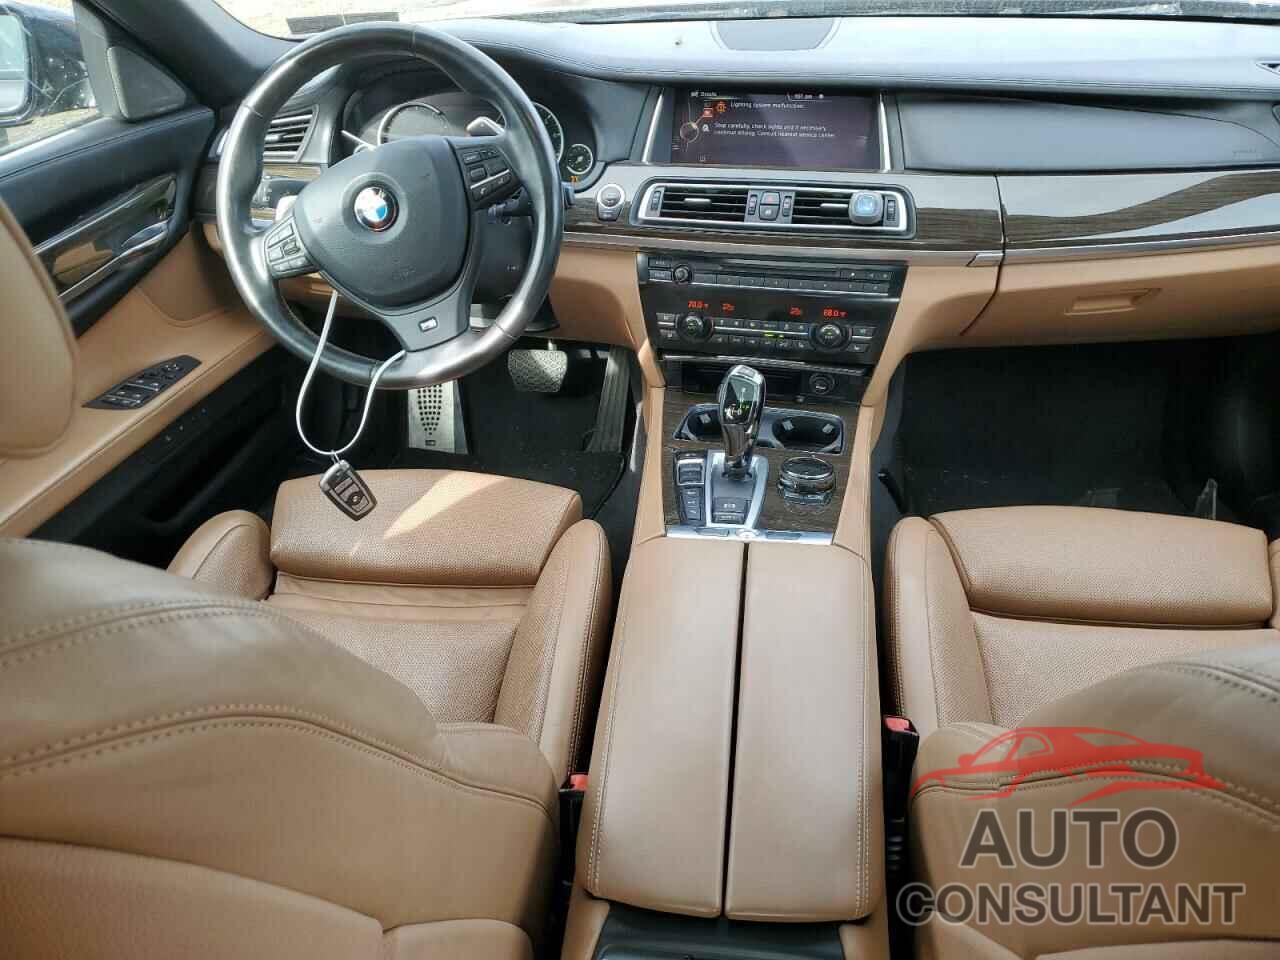 BMW 7 SERIES 2015 - WBAYB6C51FD966072